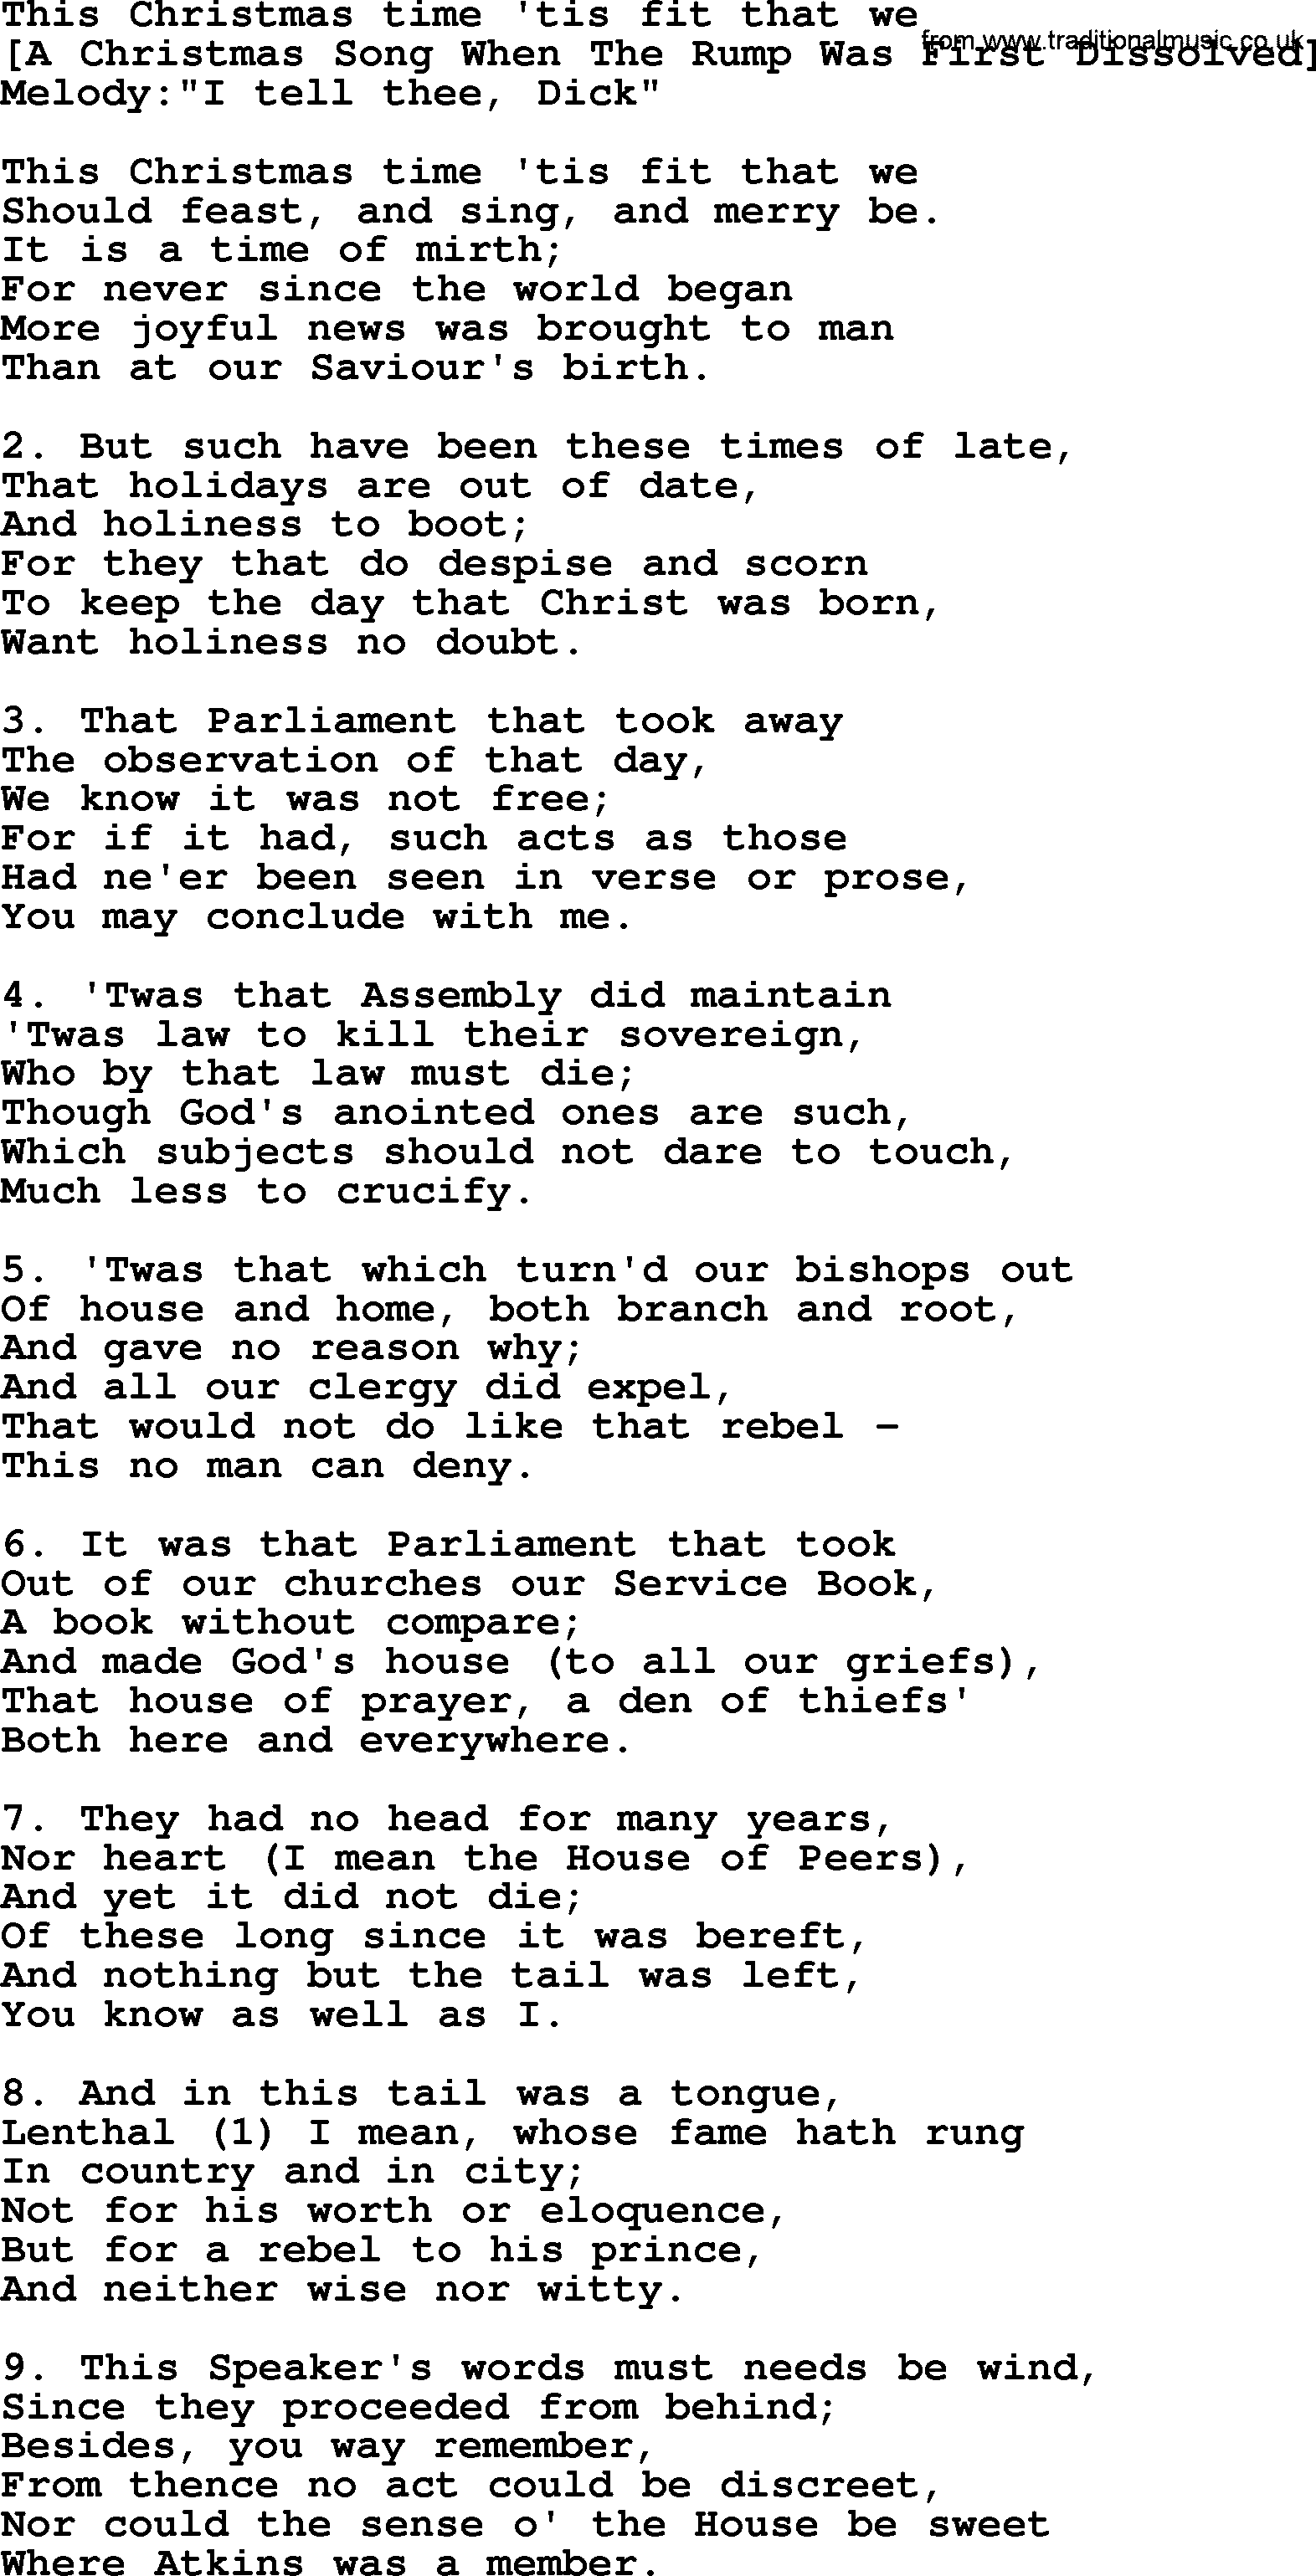 Old English Song: This Christmas Time 'tis Fit That We lyrics